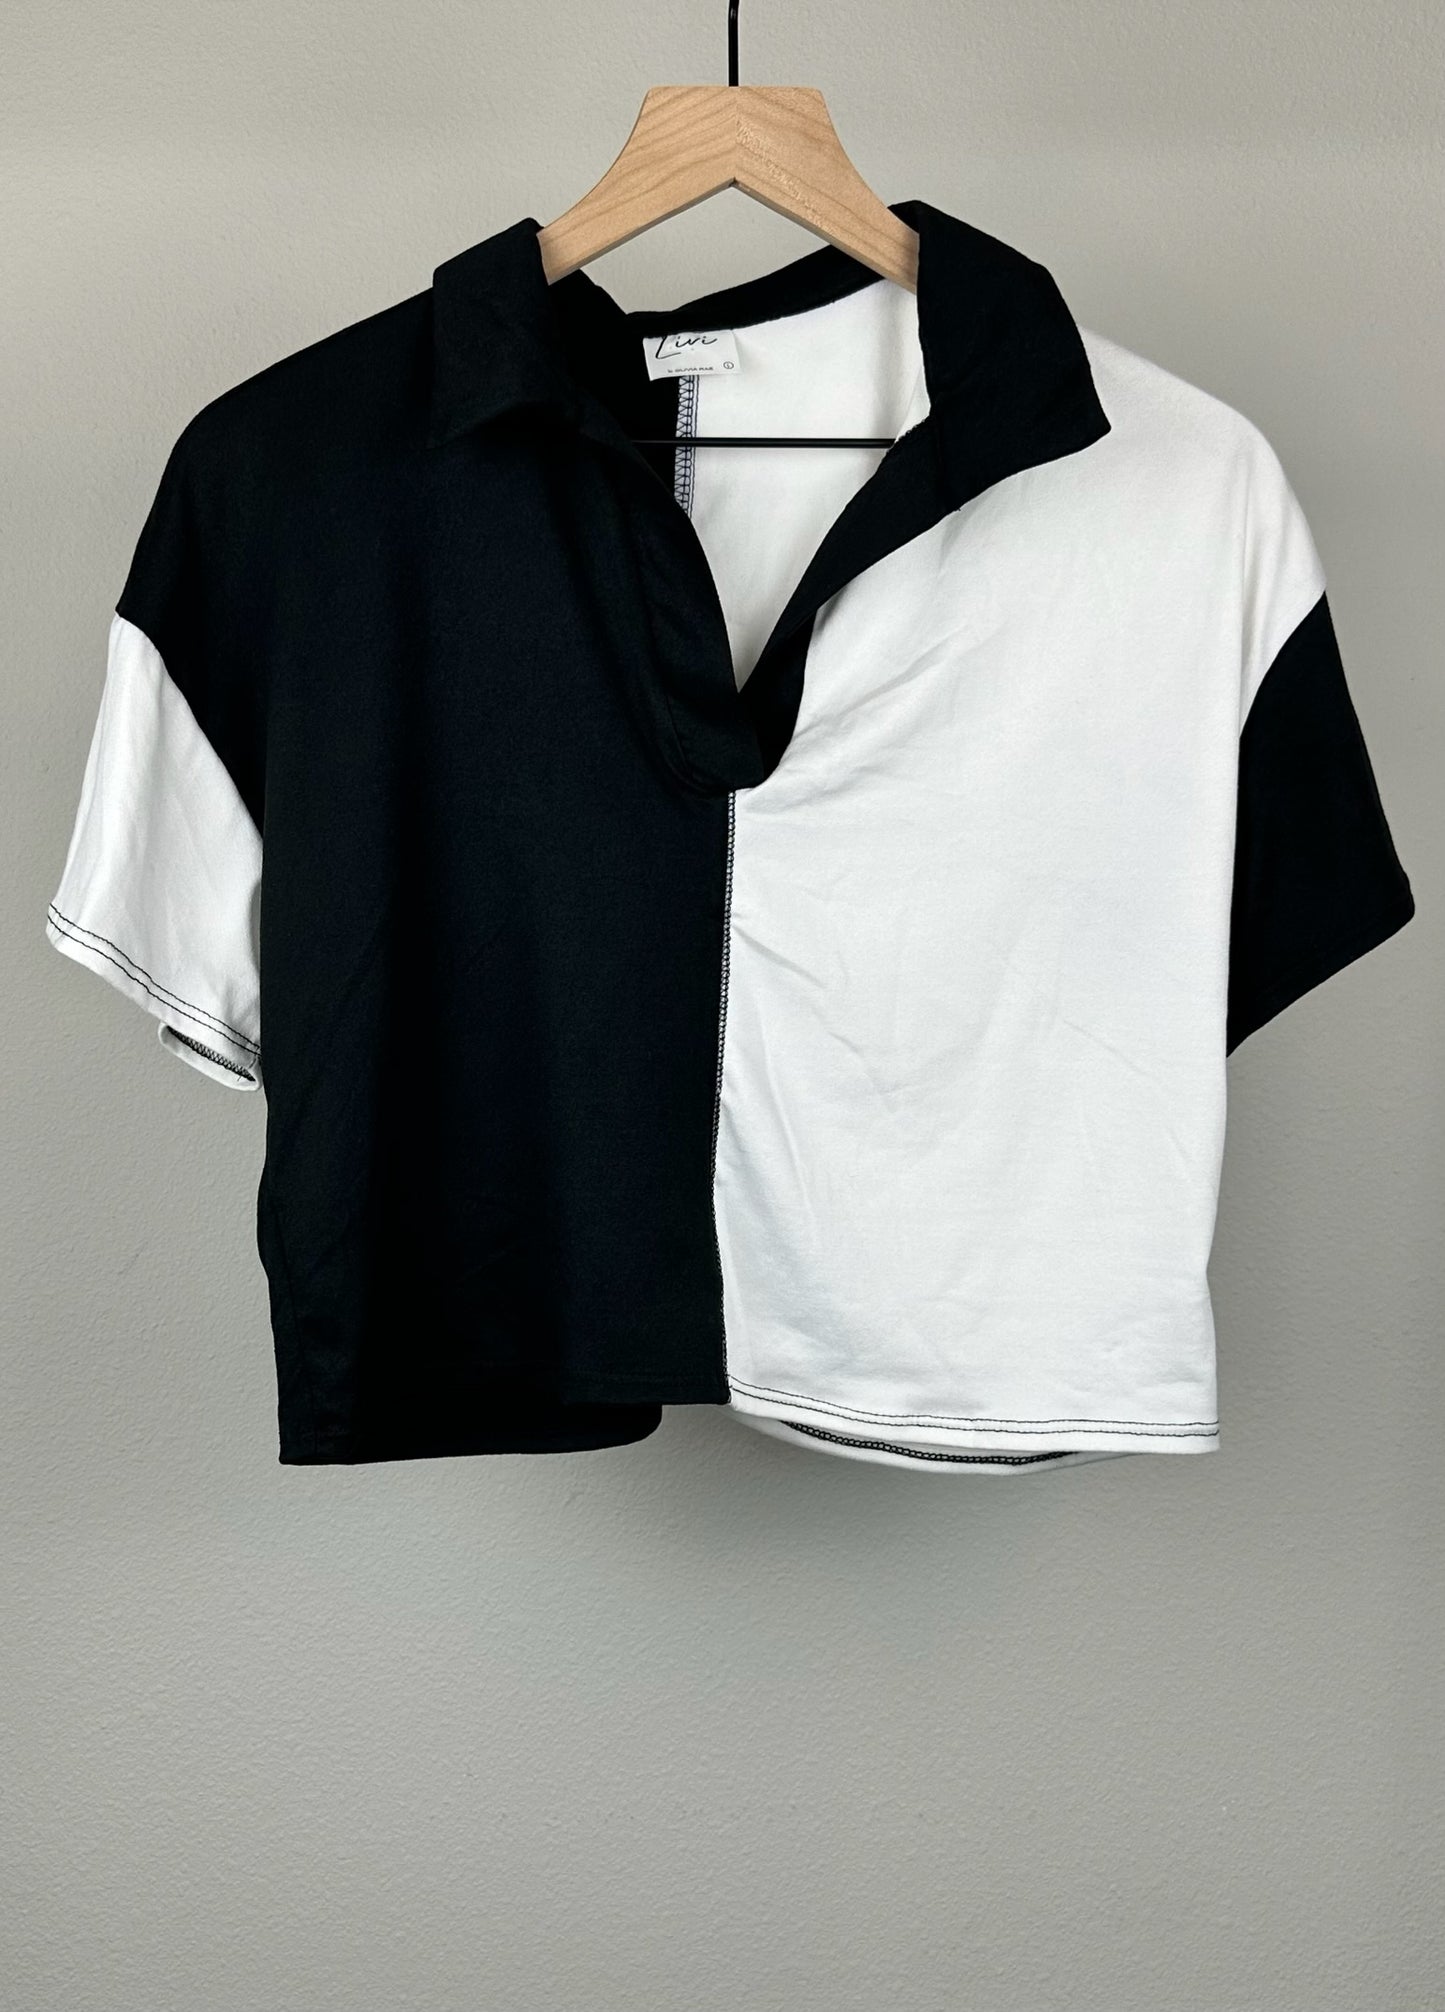 Black and White Shirt by Livi